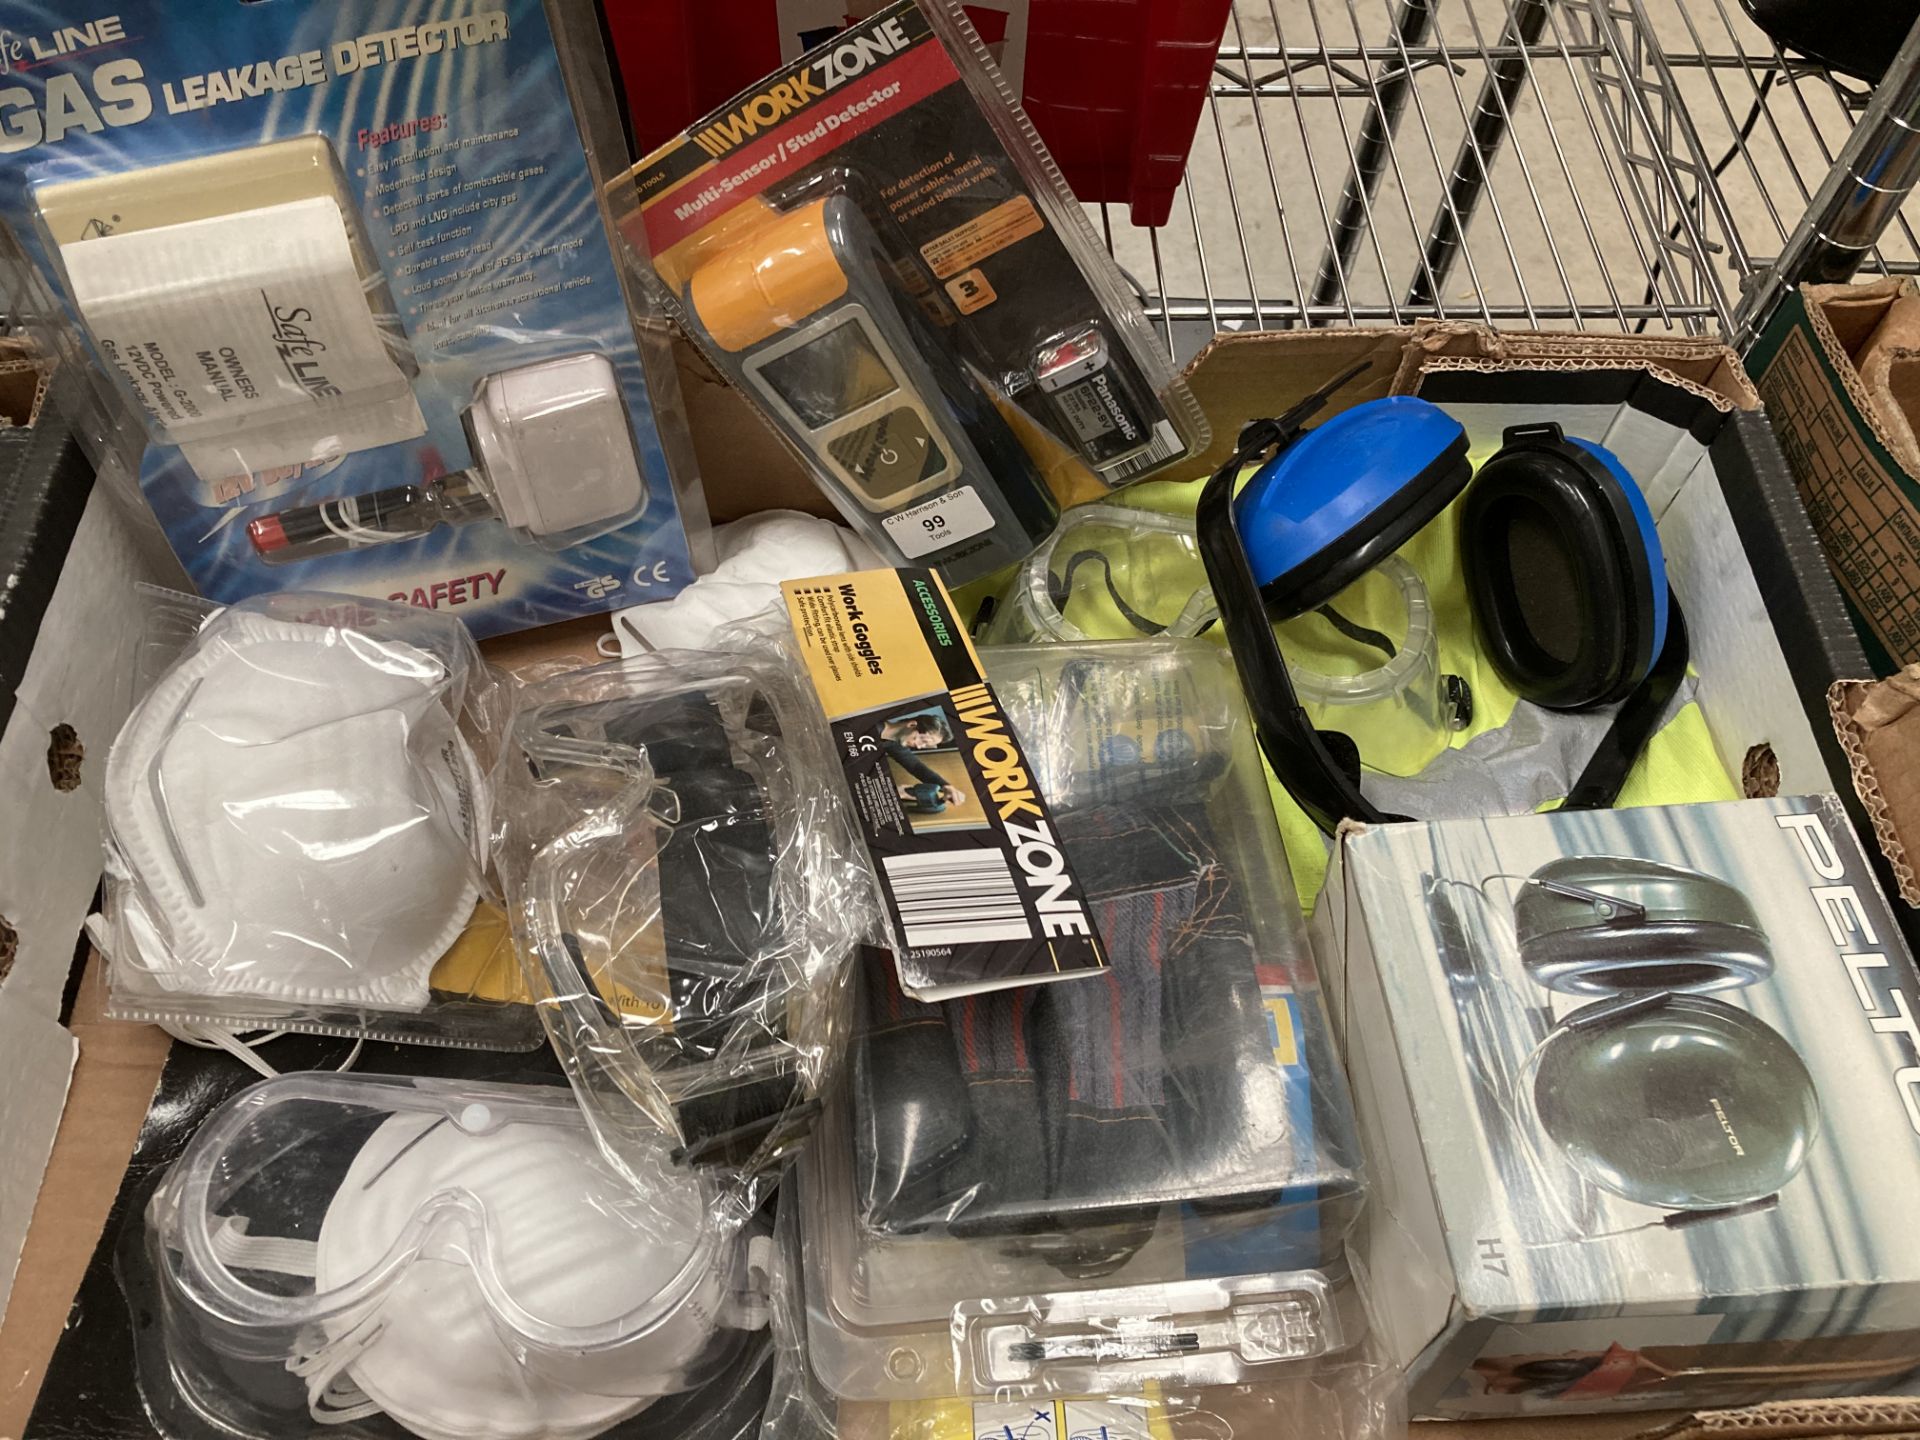 Contents to box - assorted safety equipment - ear defenders, eye protectors, hi-viz,